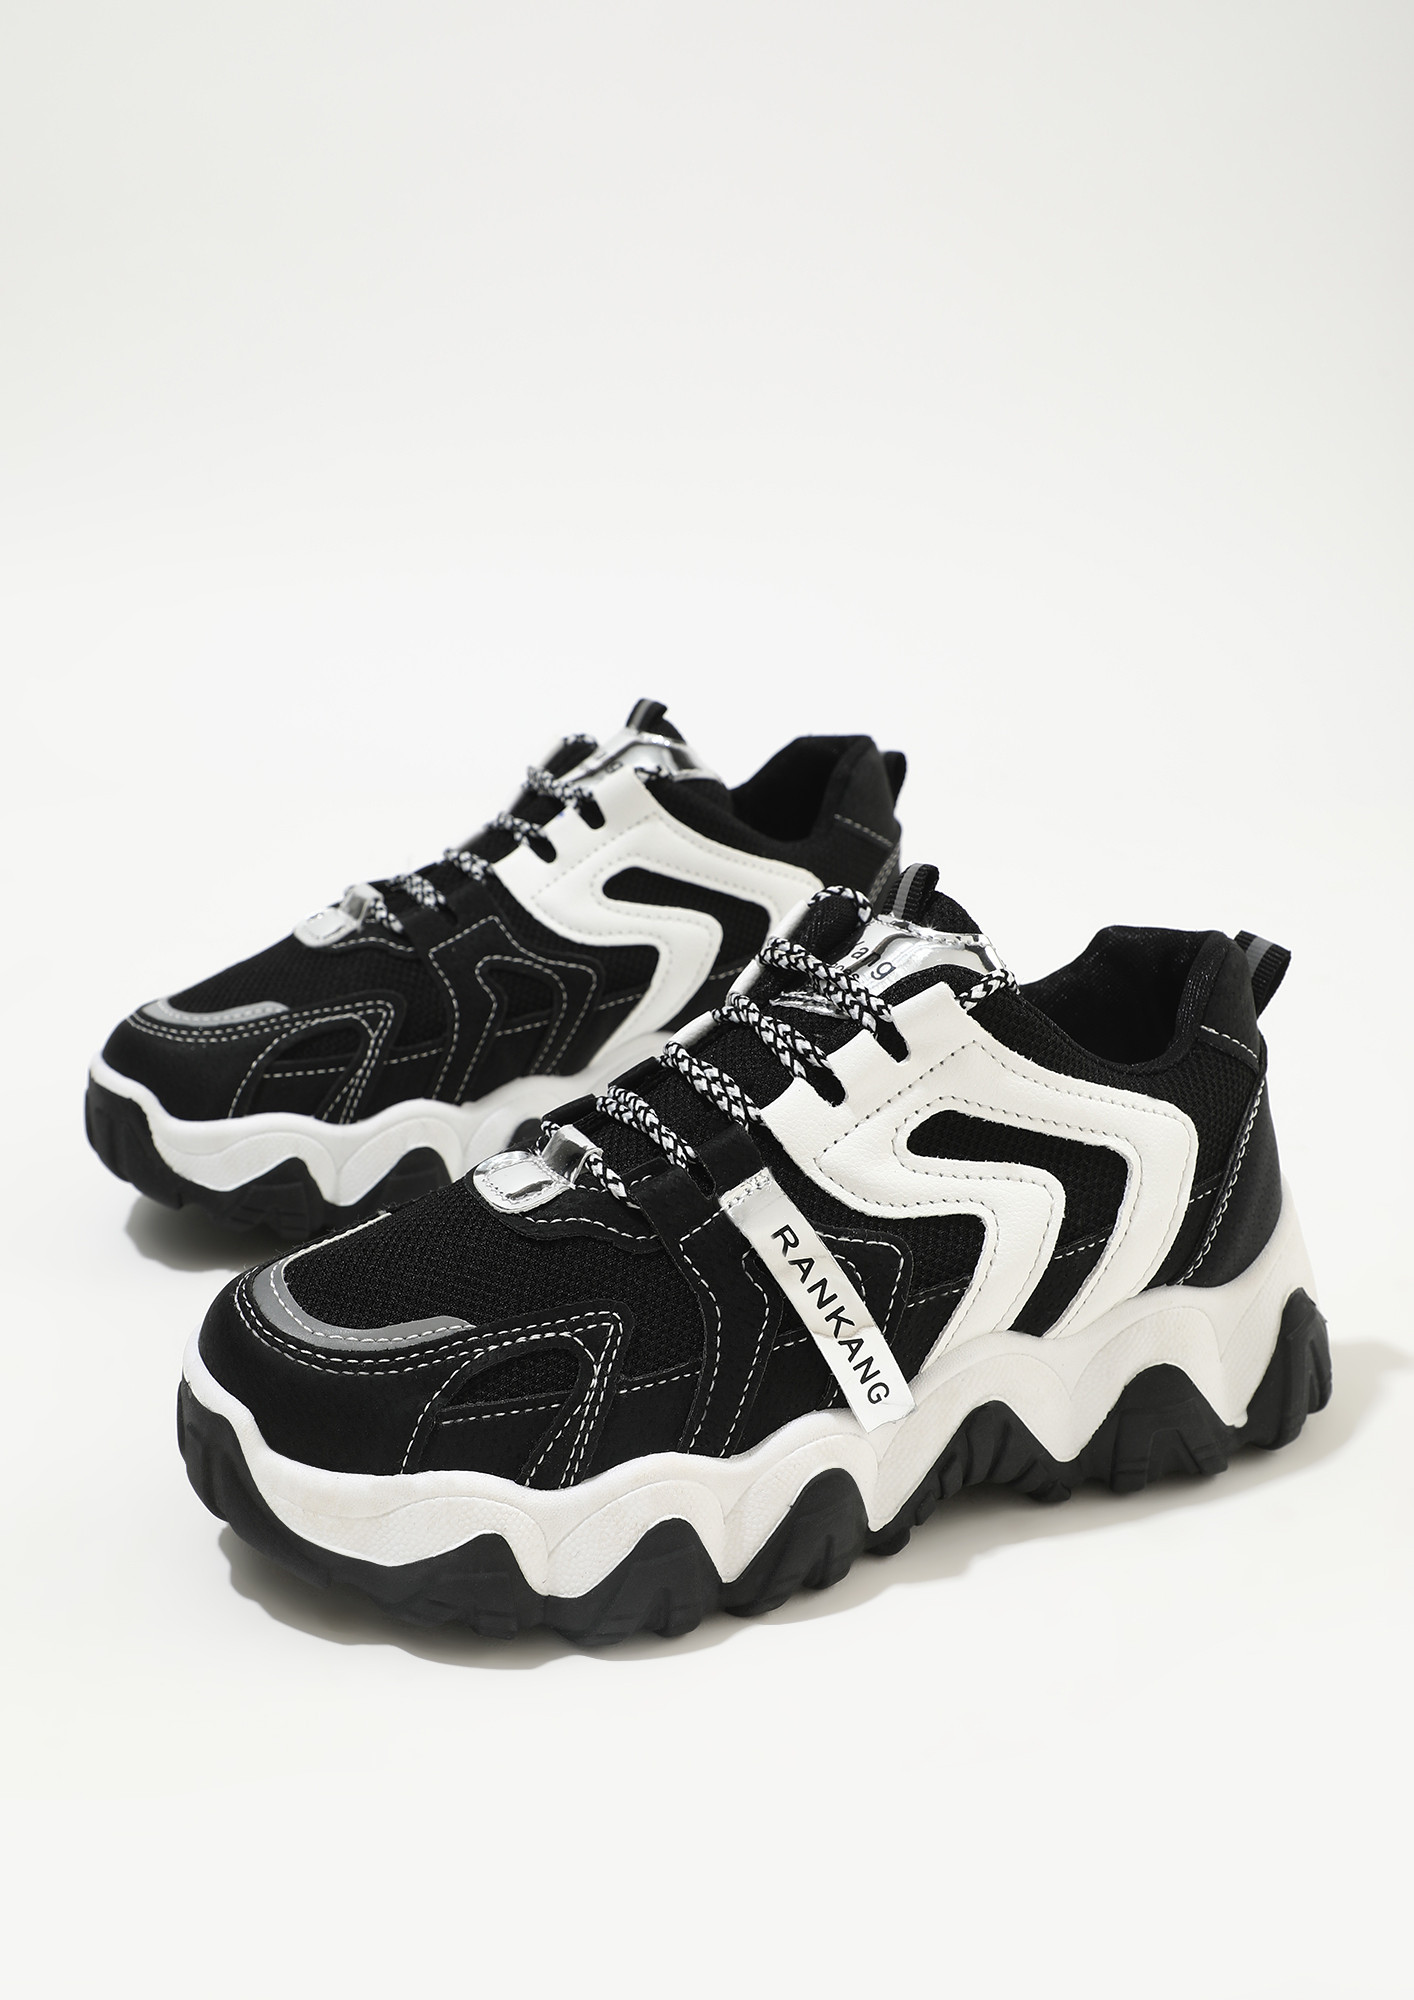 branded shoes online sneaker shopping Running| Alibaba.com